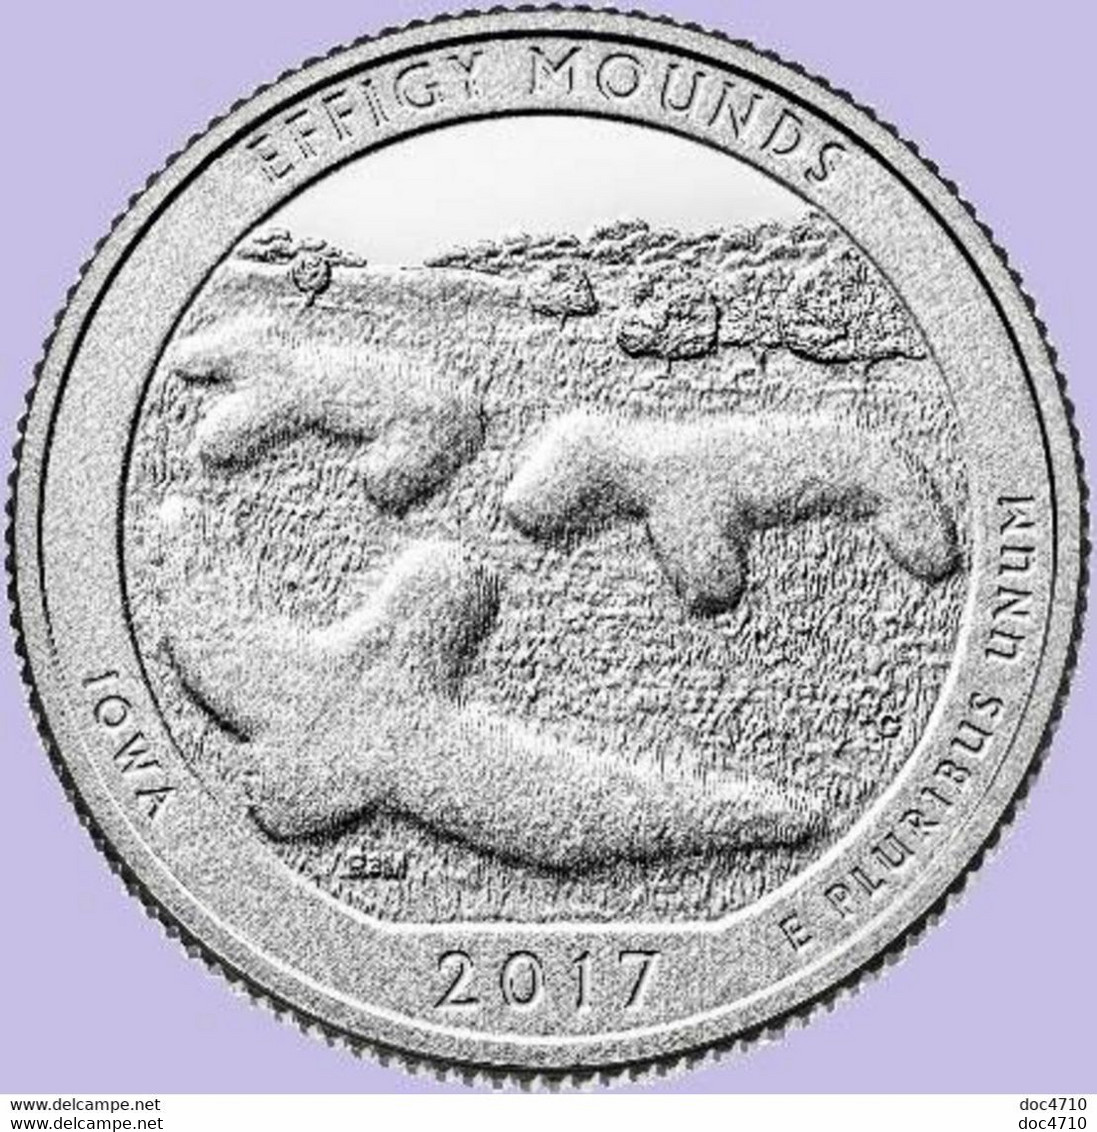 USA Quarter 1/4 Dollar 2017 D, Effigy Mounds - Iowa, KM#653, Unc - 2010-...: National Parks